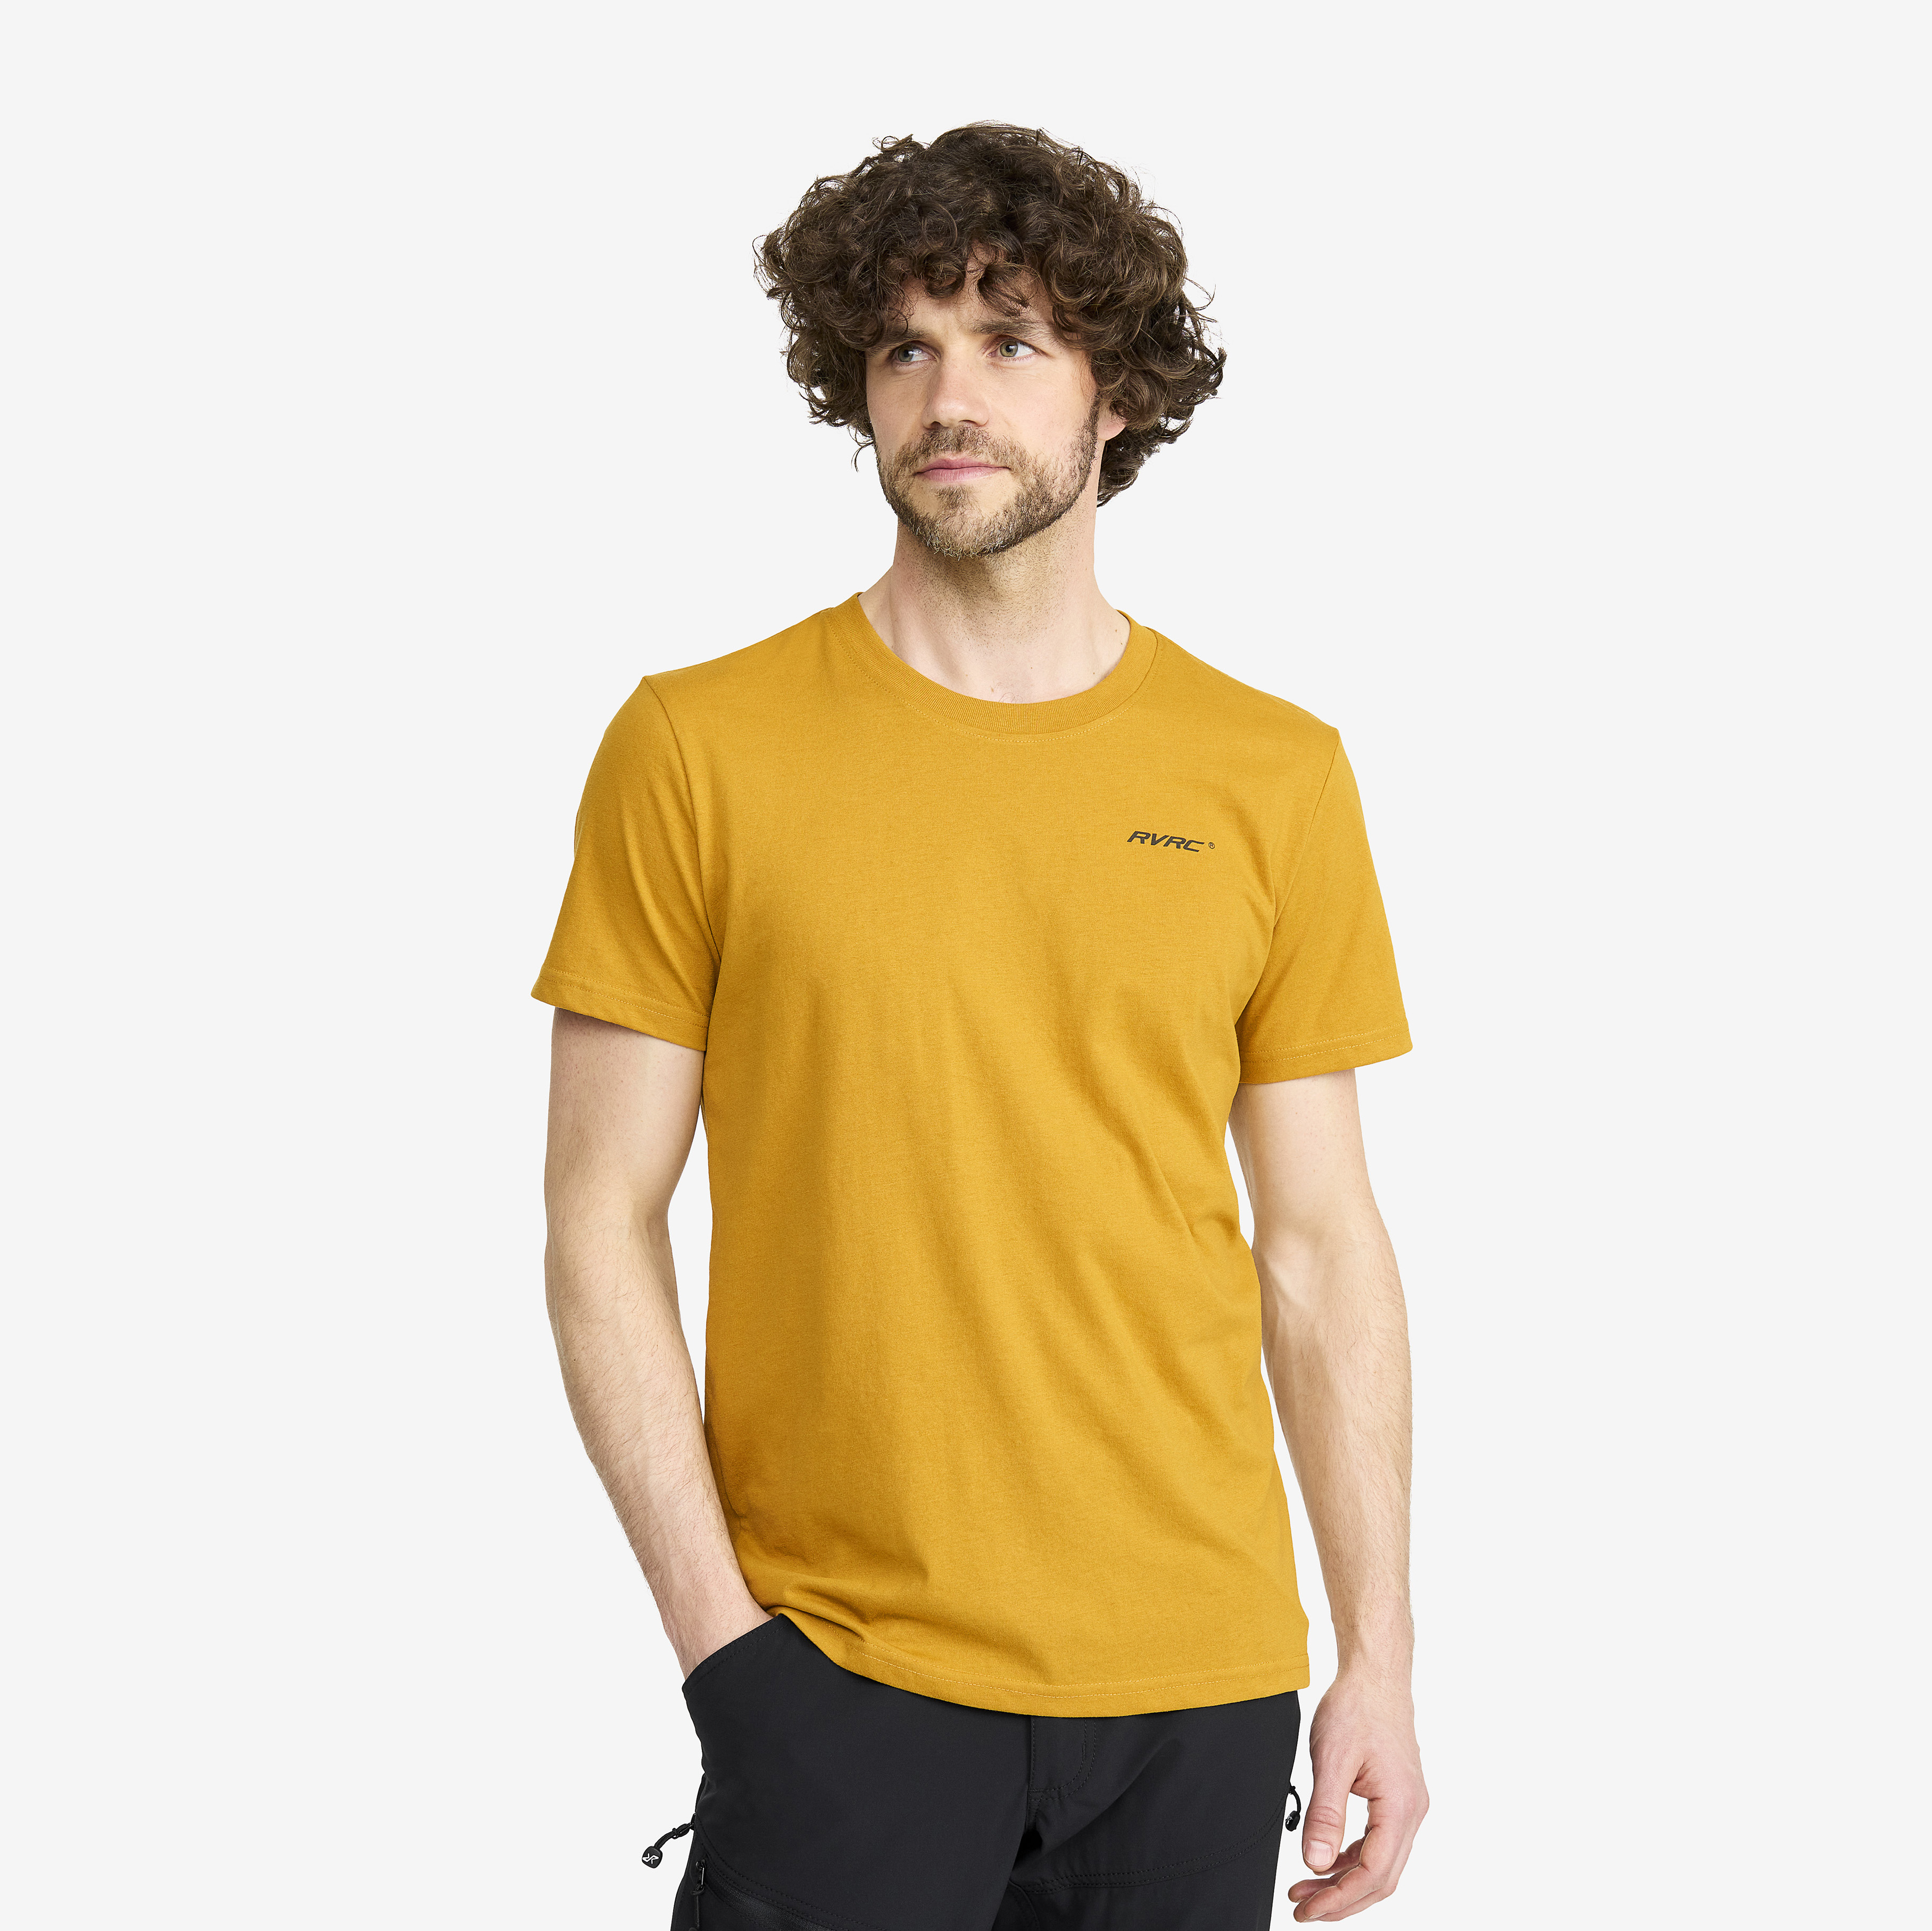 Easy T-shirt Slim Fit Harvest Gold Men